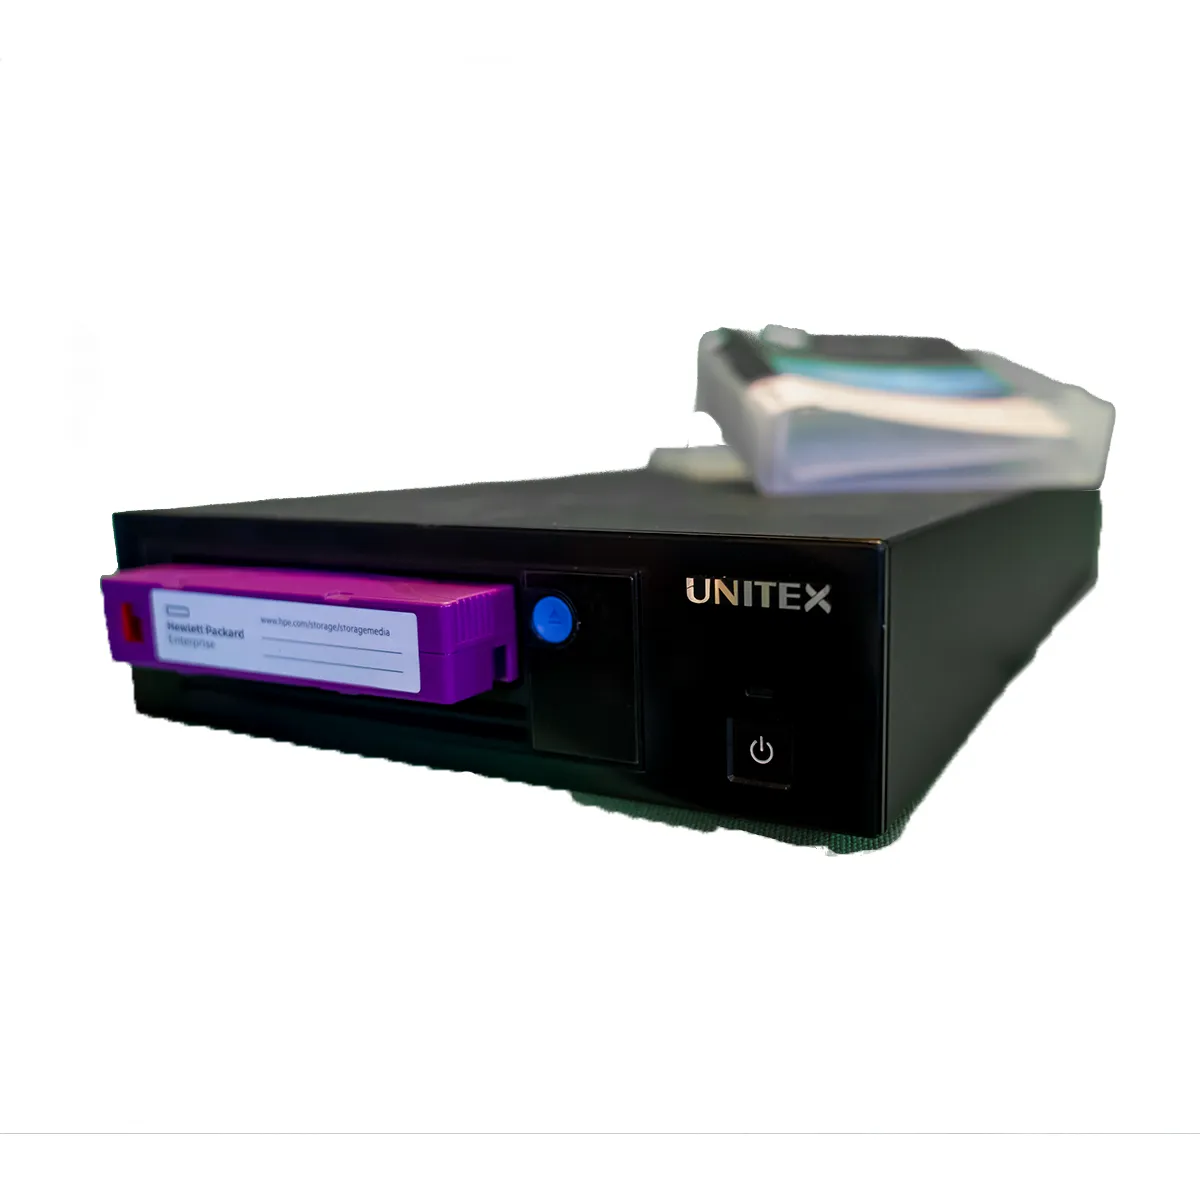 Black and purple LTO backup drive with purple label